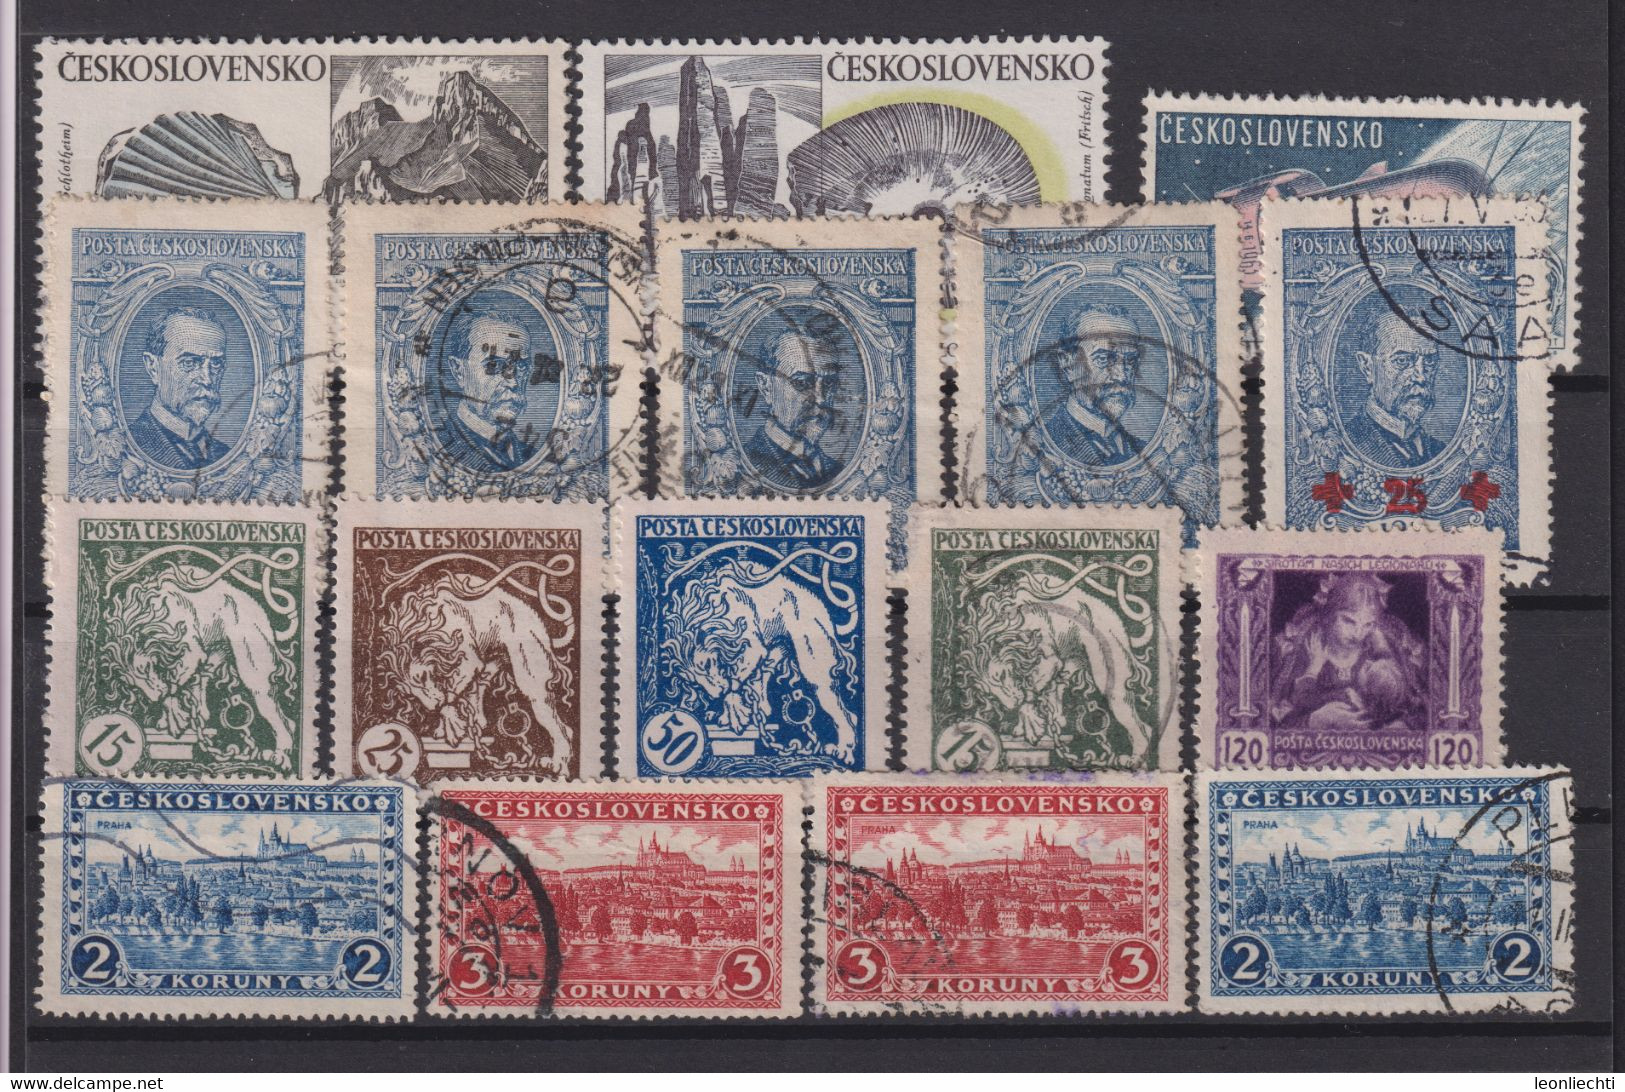 Tschechoslowakei Lot ° Briefmarken Gestempelt /  Stamps Stamped /  Timbres Oblitérés - Lots & Serien